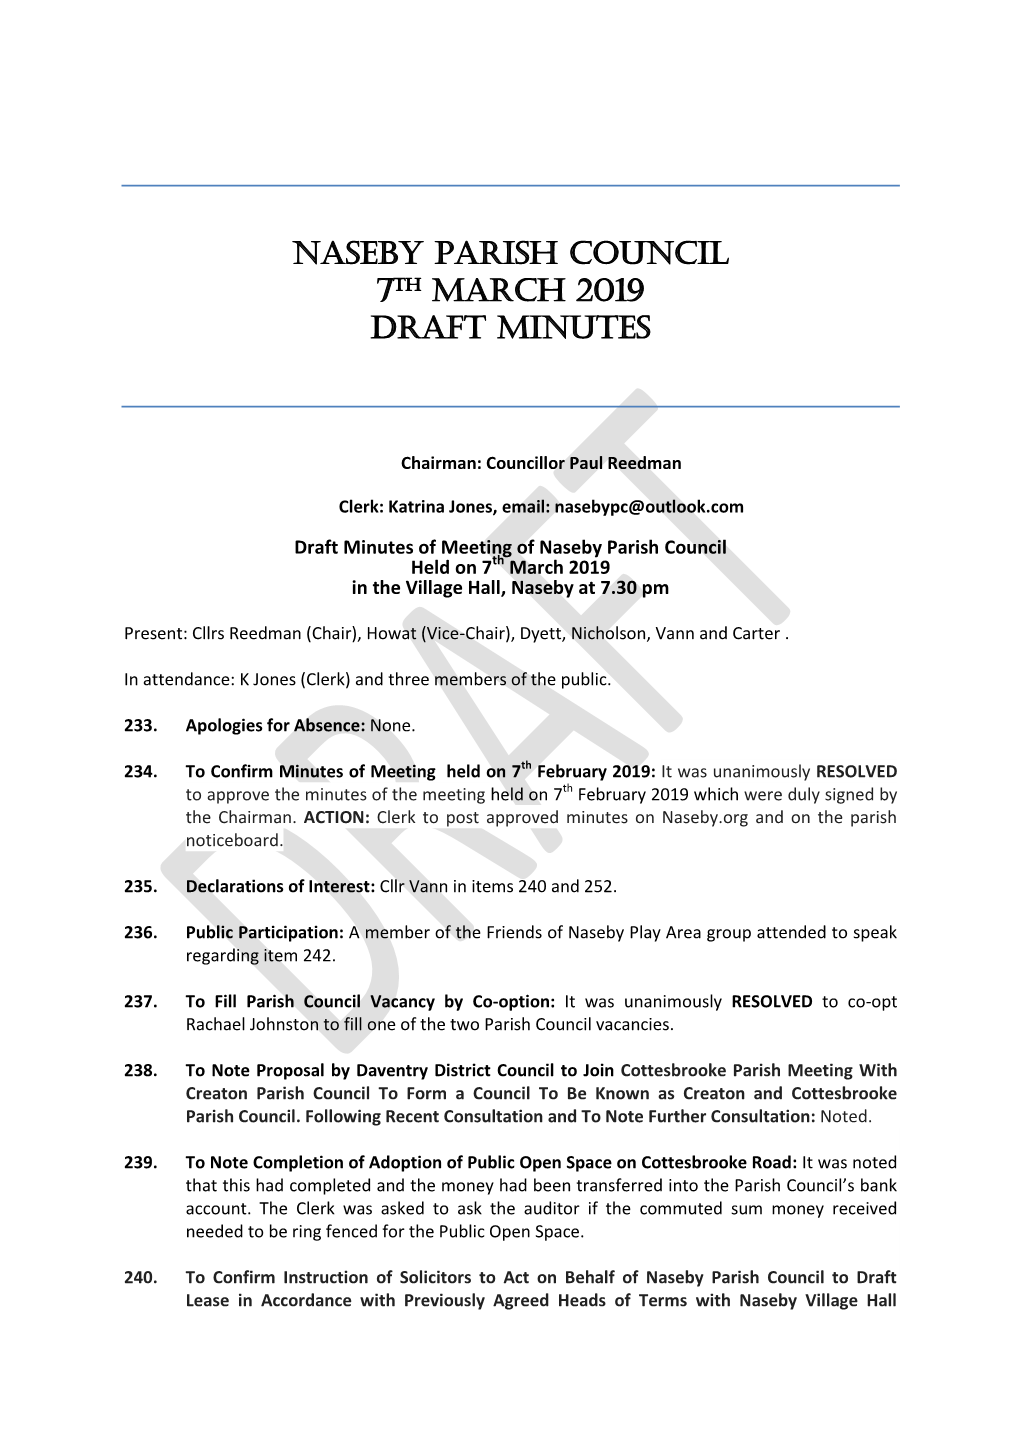 NASEBY Parish Council 7TH MARCH 2019 DRAFT Minutes